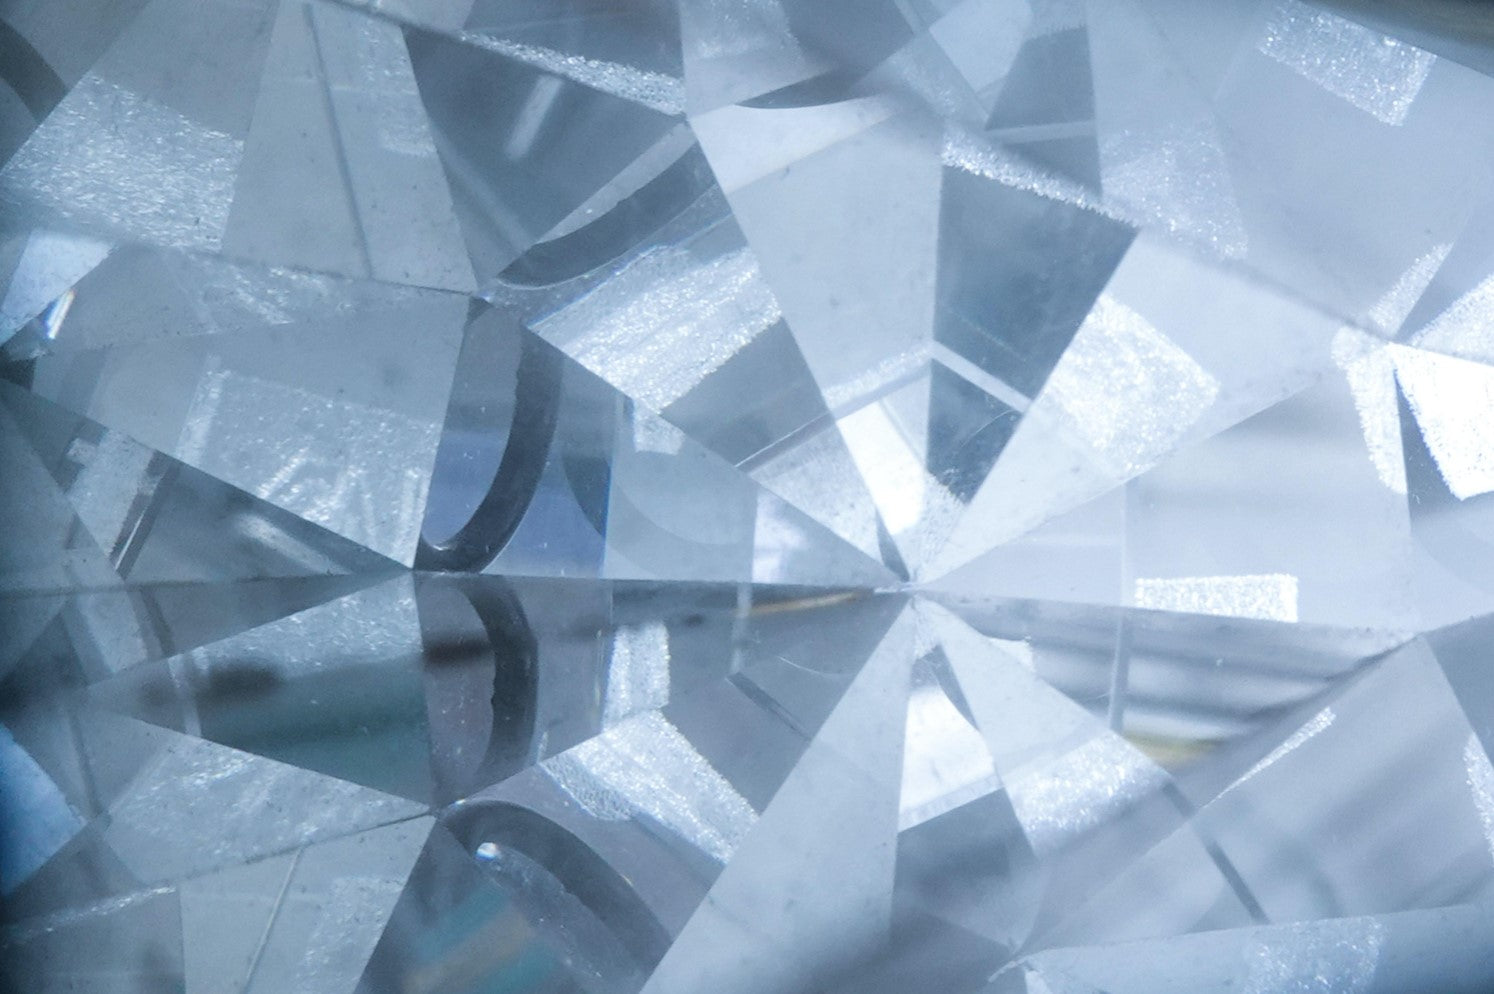 4Cs of Diamond Quality: Diamond Clarity Grading by GIA 